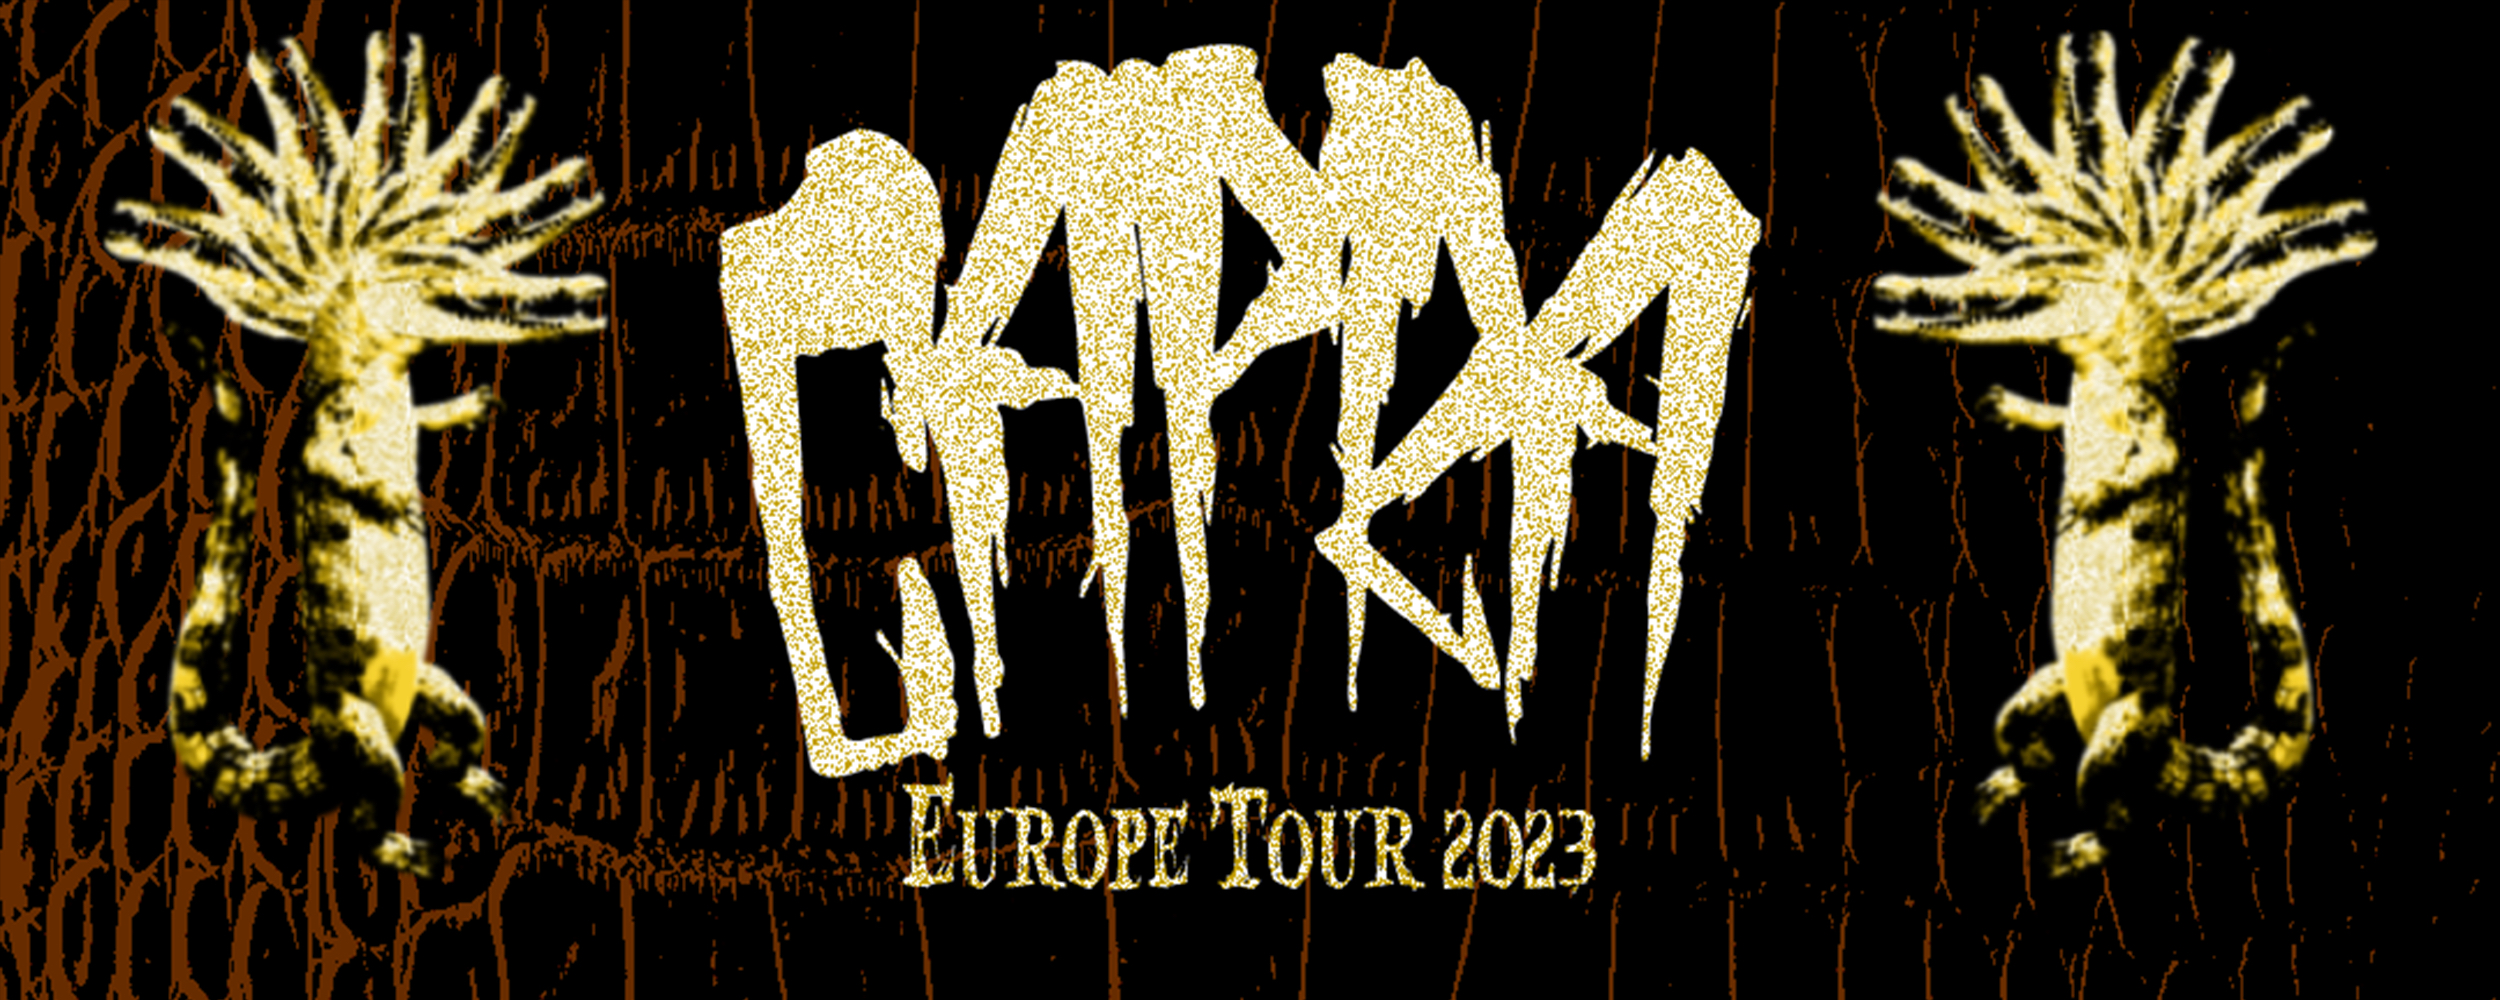 CAPRA – le tre date italiane dell’Europe Tour 2023